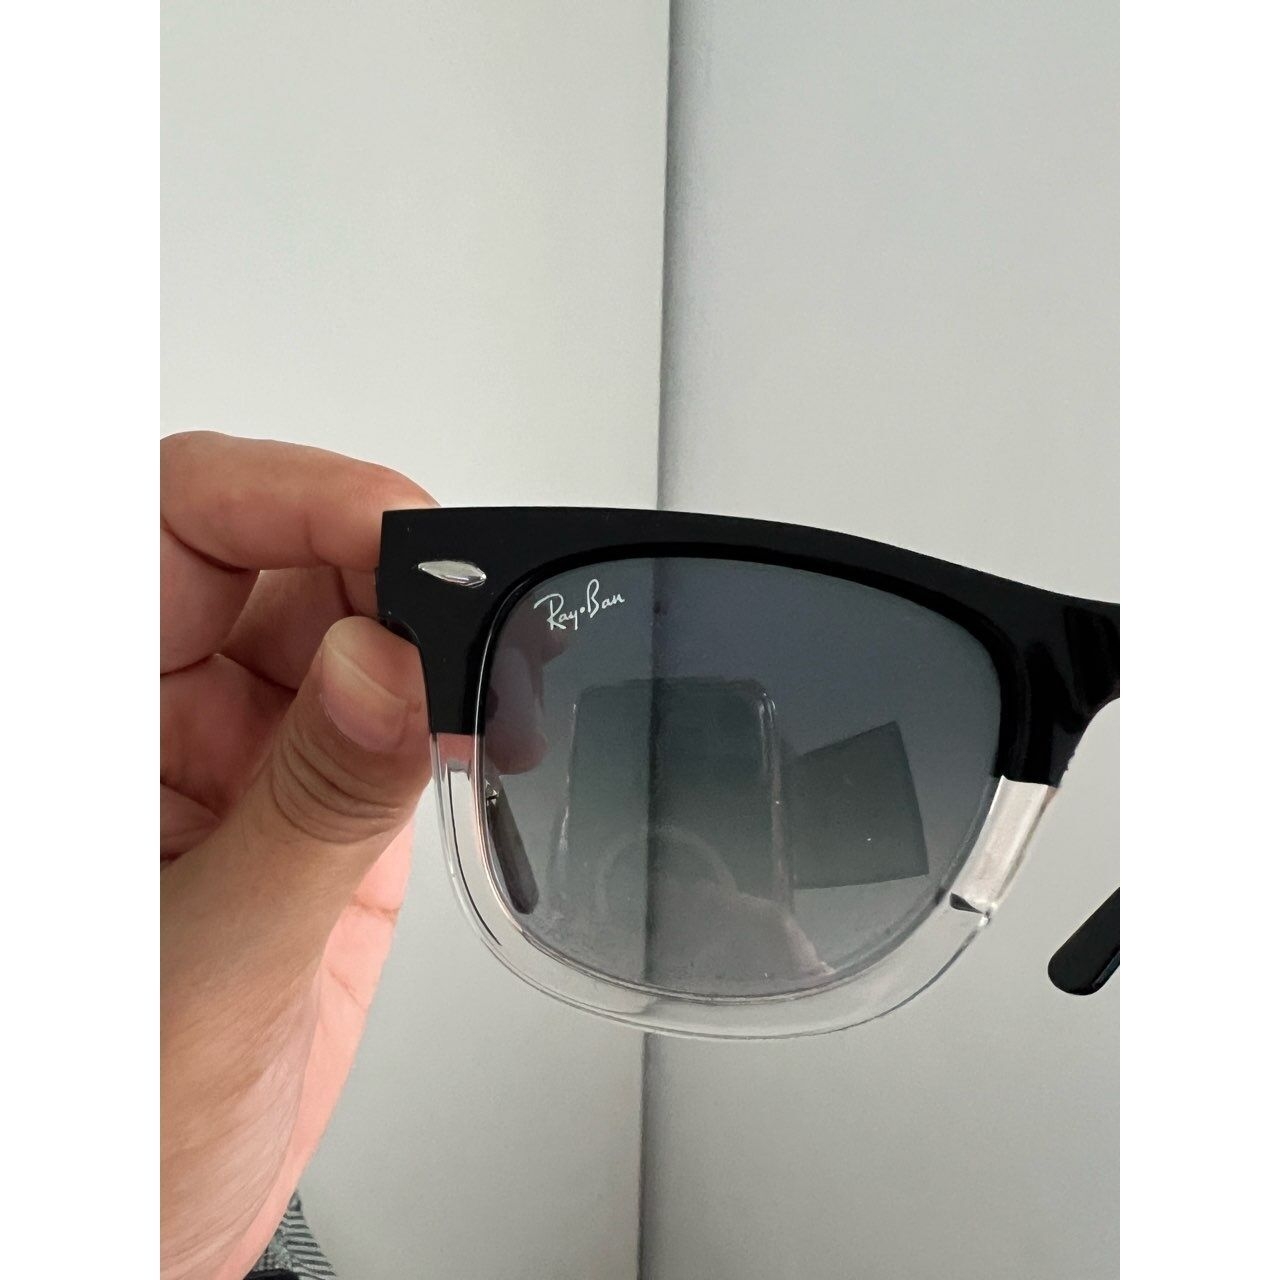 Ray-Ban Black Sunglasses